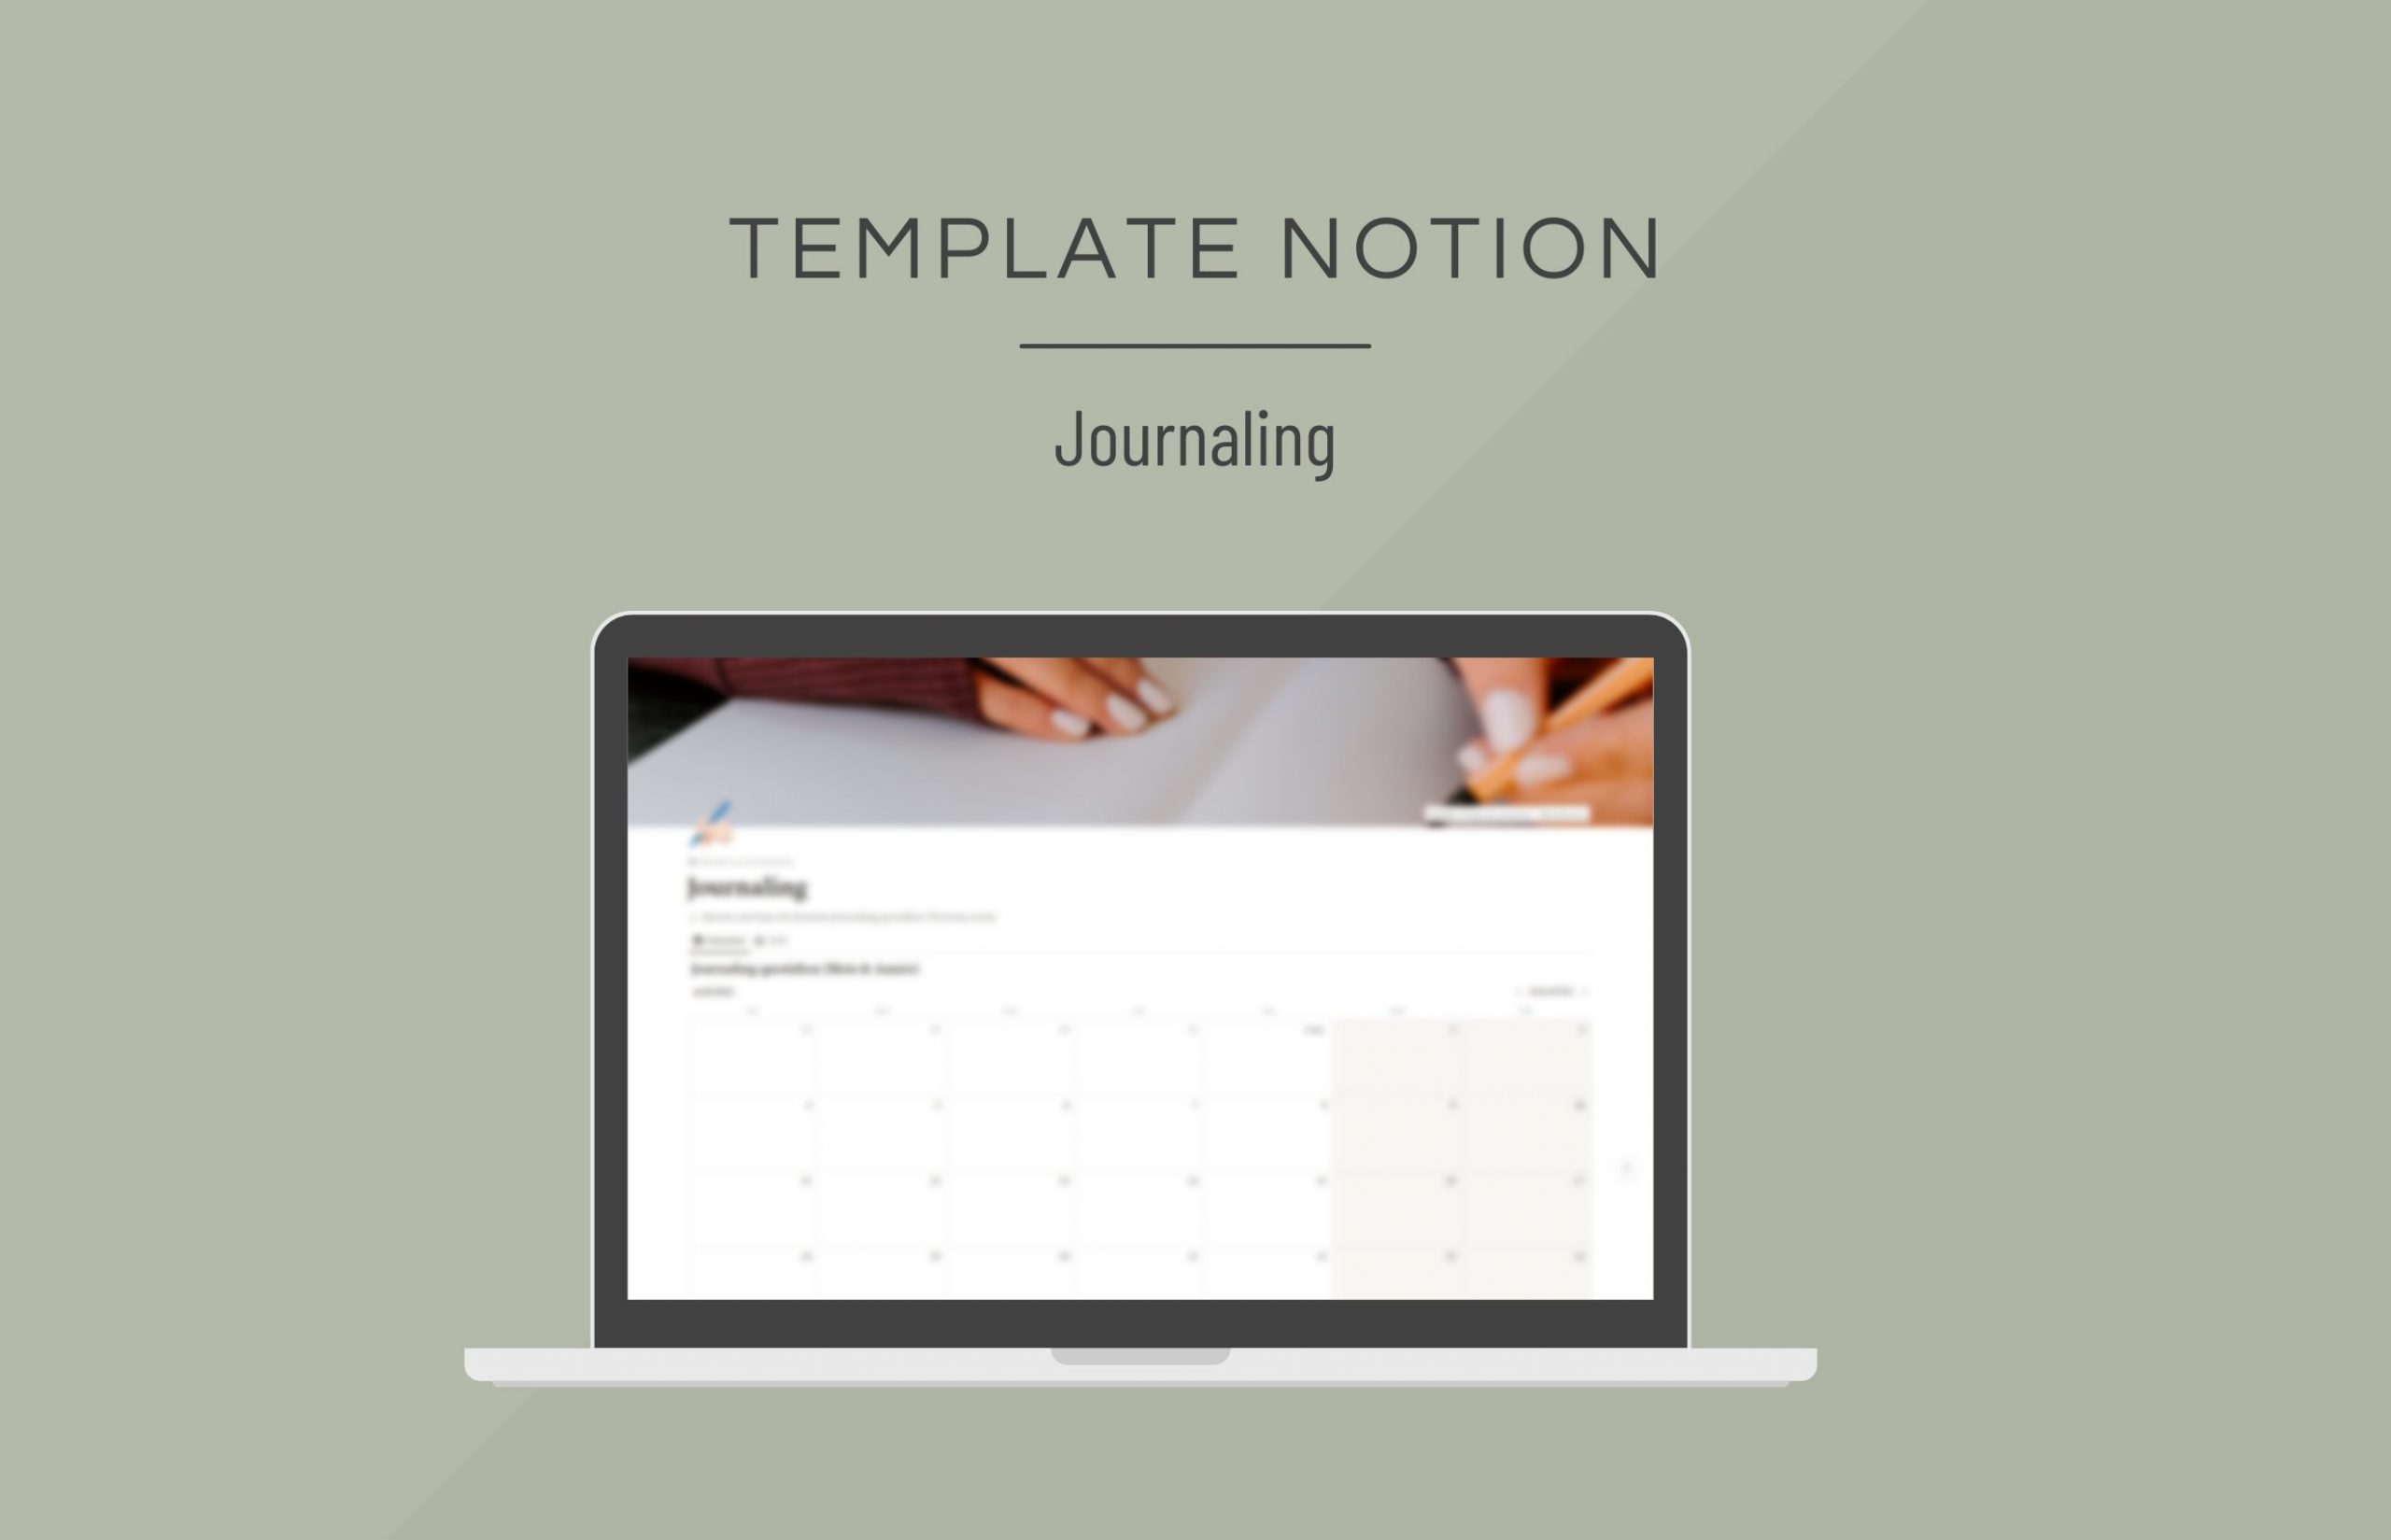 Template_notion_journaling